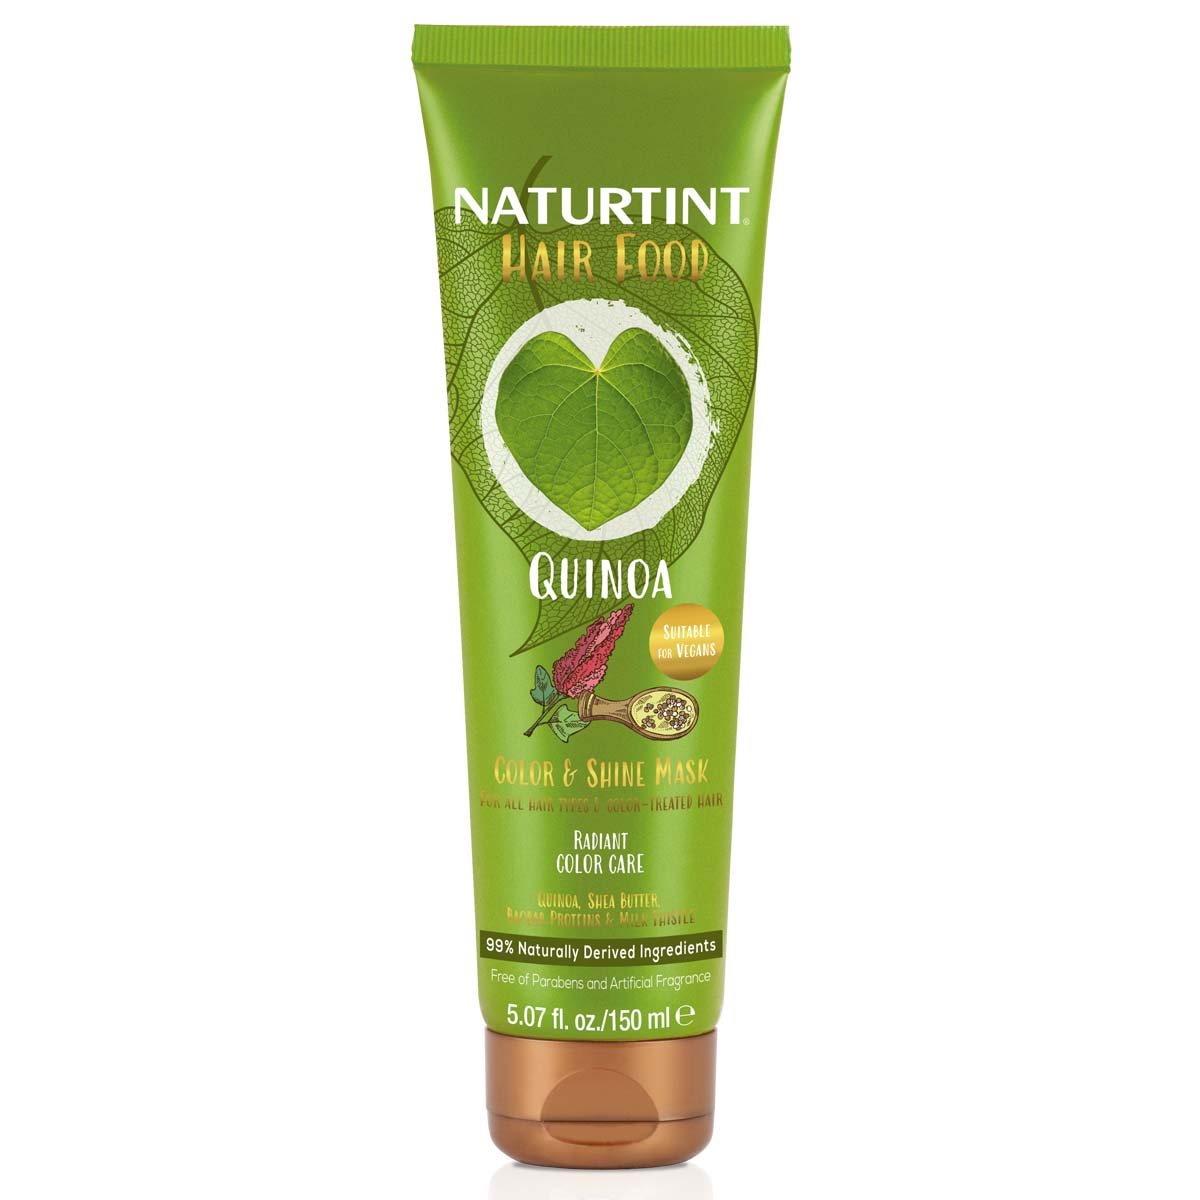 Naturtint Hair Food Deep Conditioning Mask - Quinoa Color & Shine